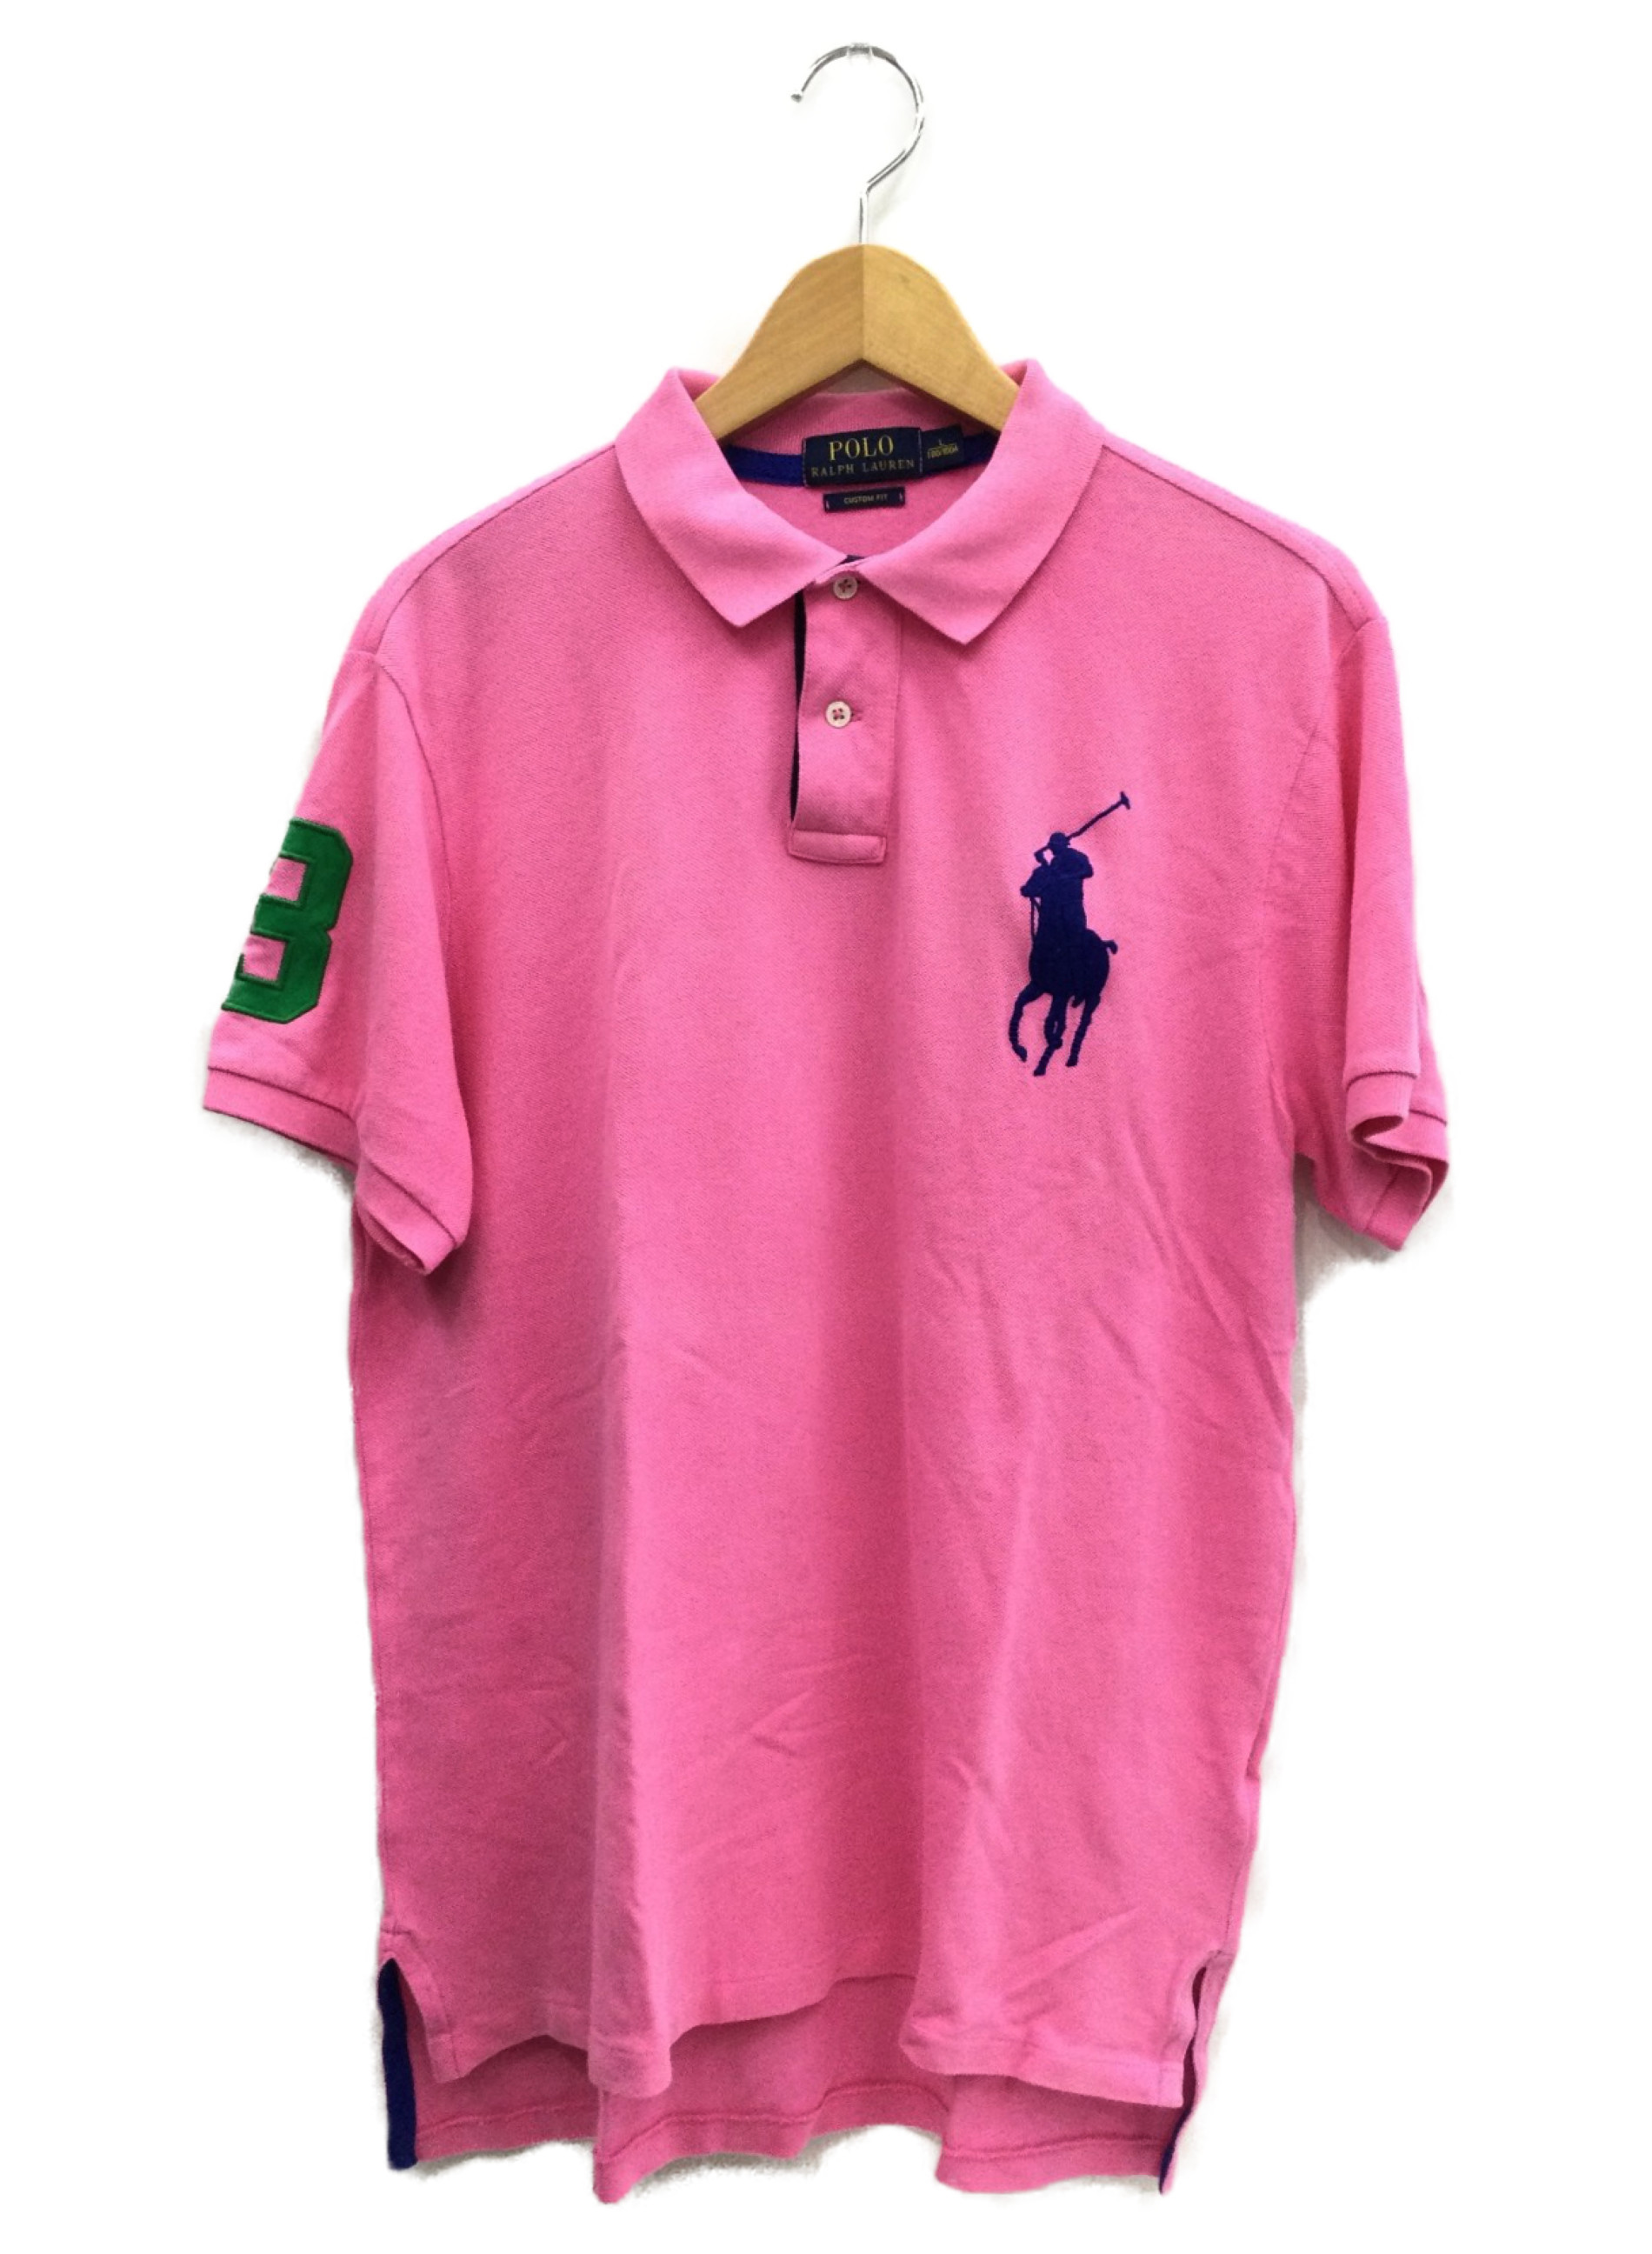 POLO RALPH LAUREN (ポロ・ラルフローレン) BIGポニー鹿の子ポロシャツ ショッキングピンク×ネイビー サイズ:L 180/100A